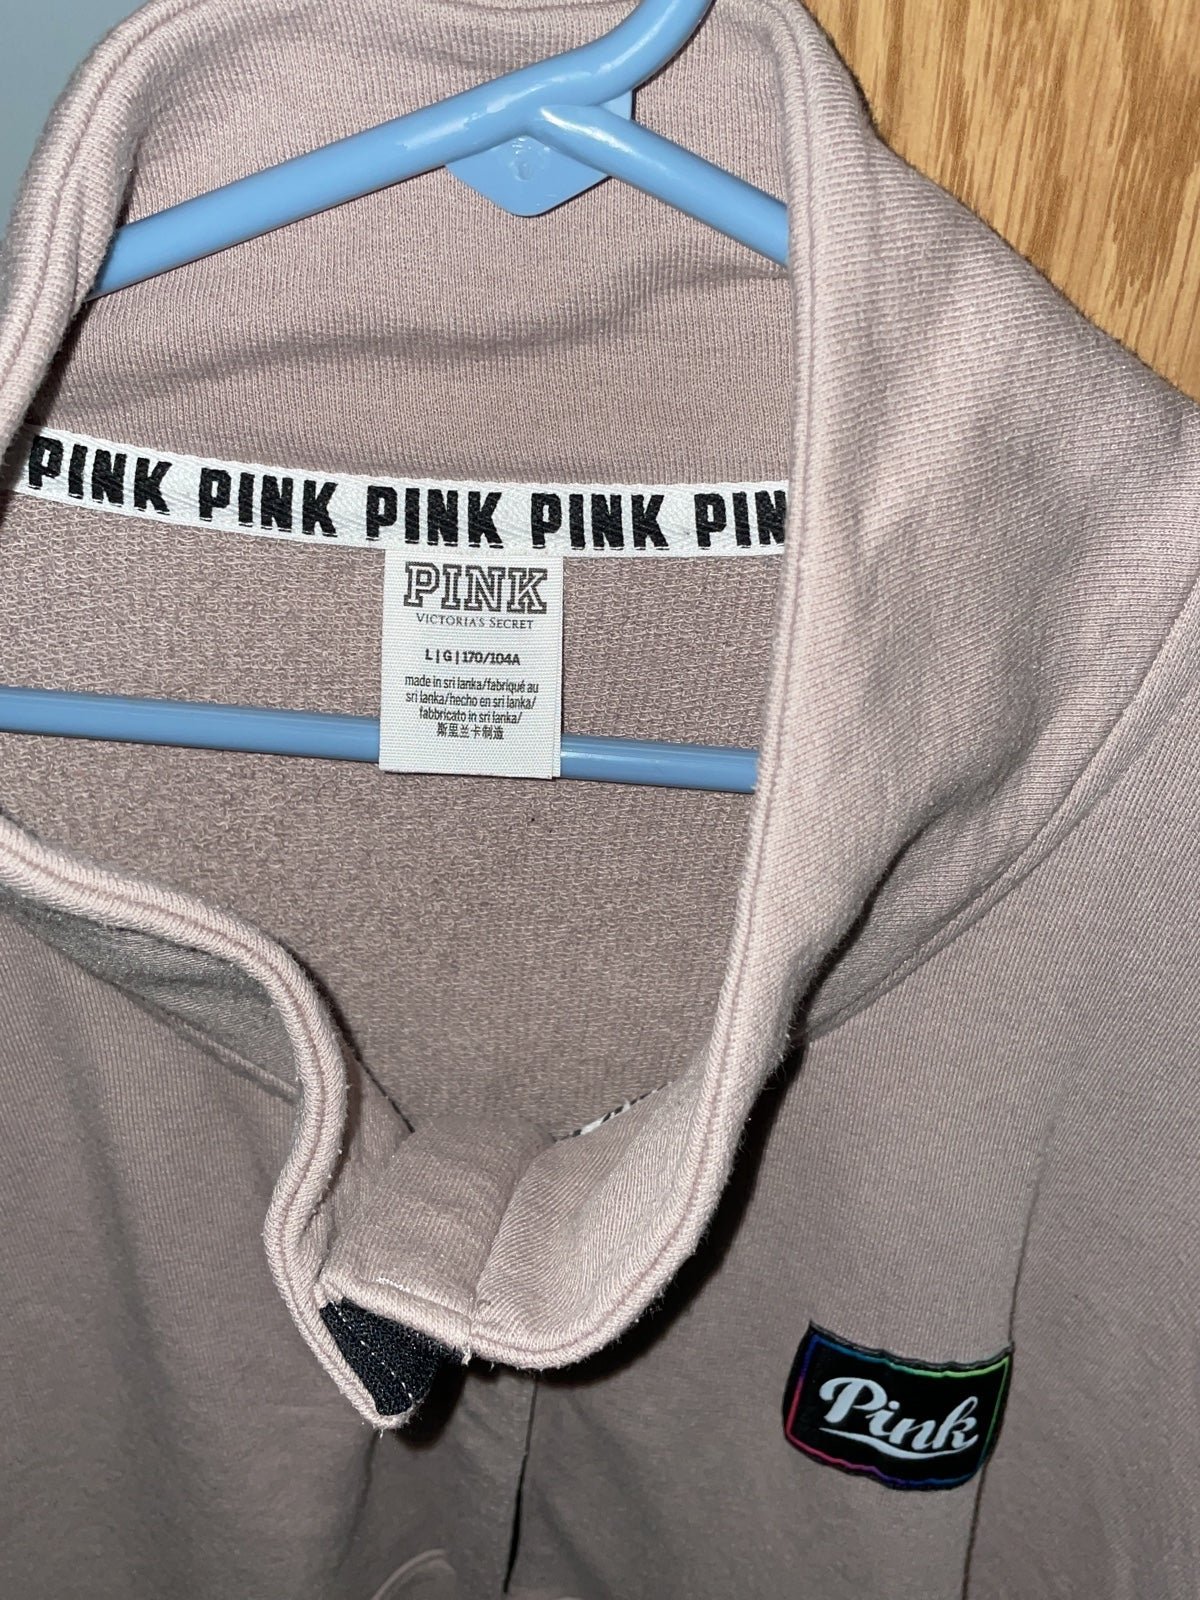 Great PINK pullover PJFVtxnZu Everyday Low Prices